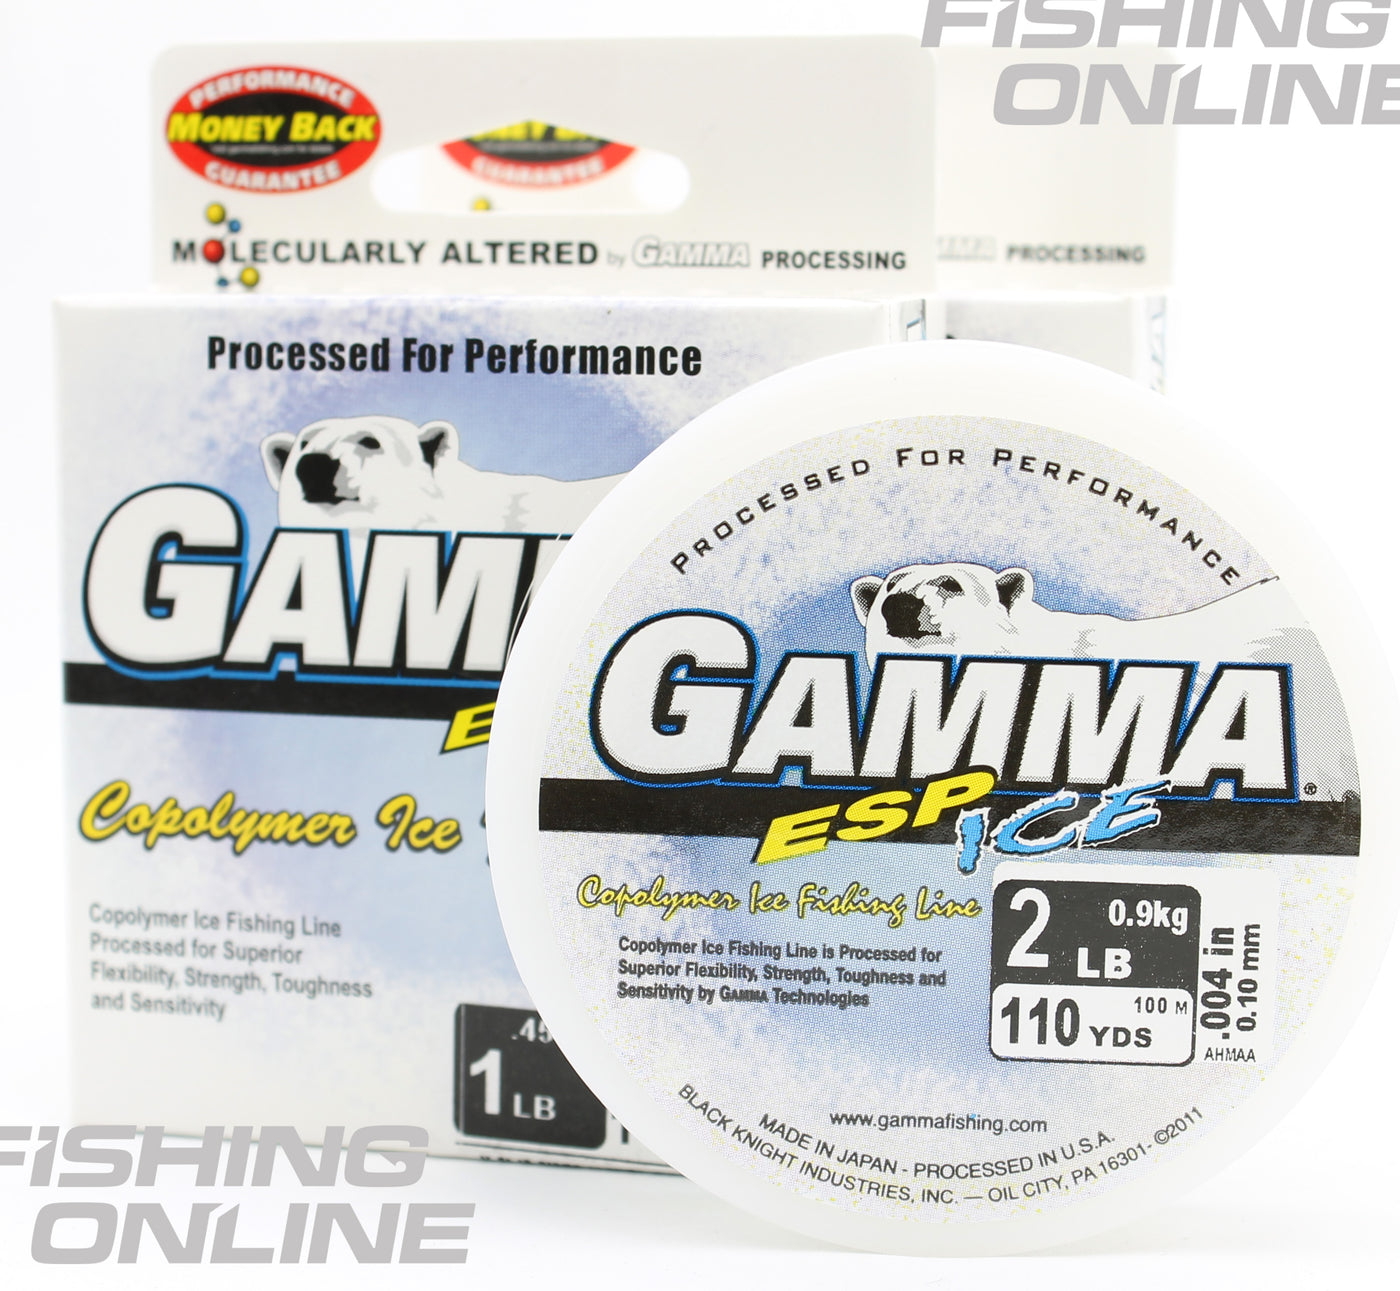 GAMMA ESP ICE Copolymer Ice Fishing Line – Fishing Online